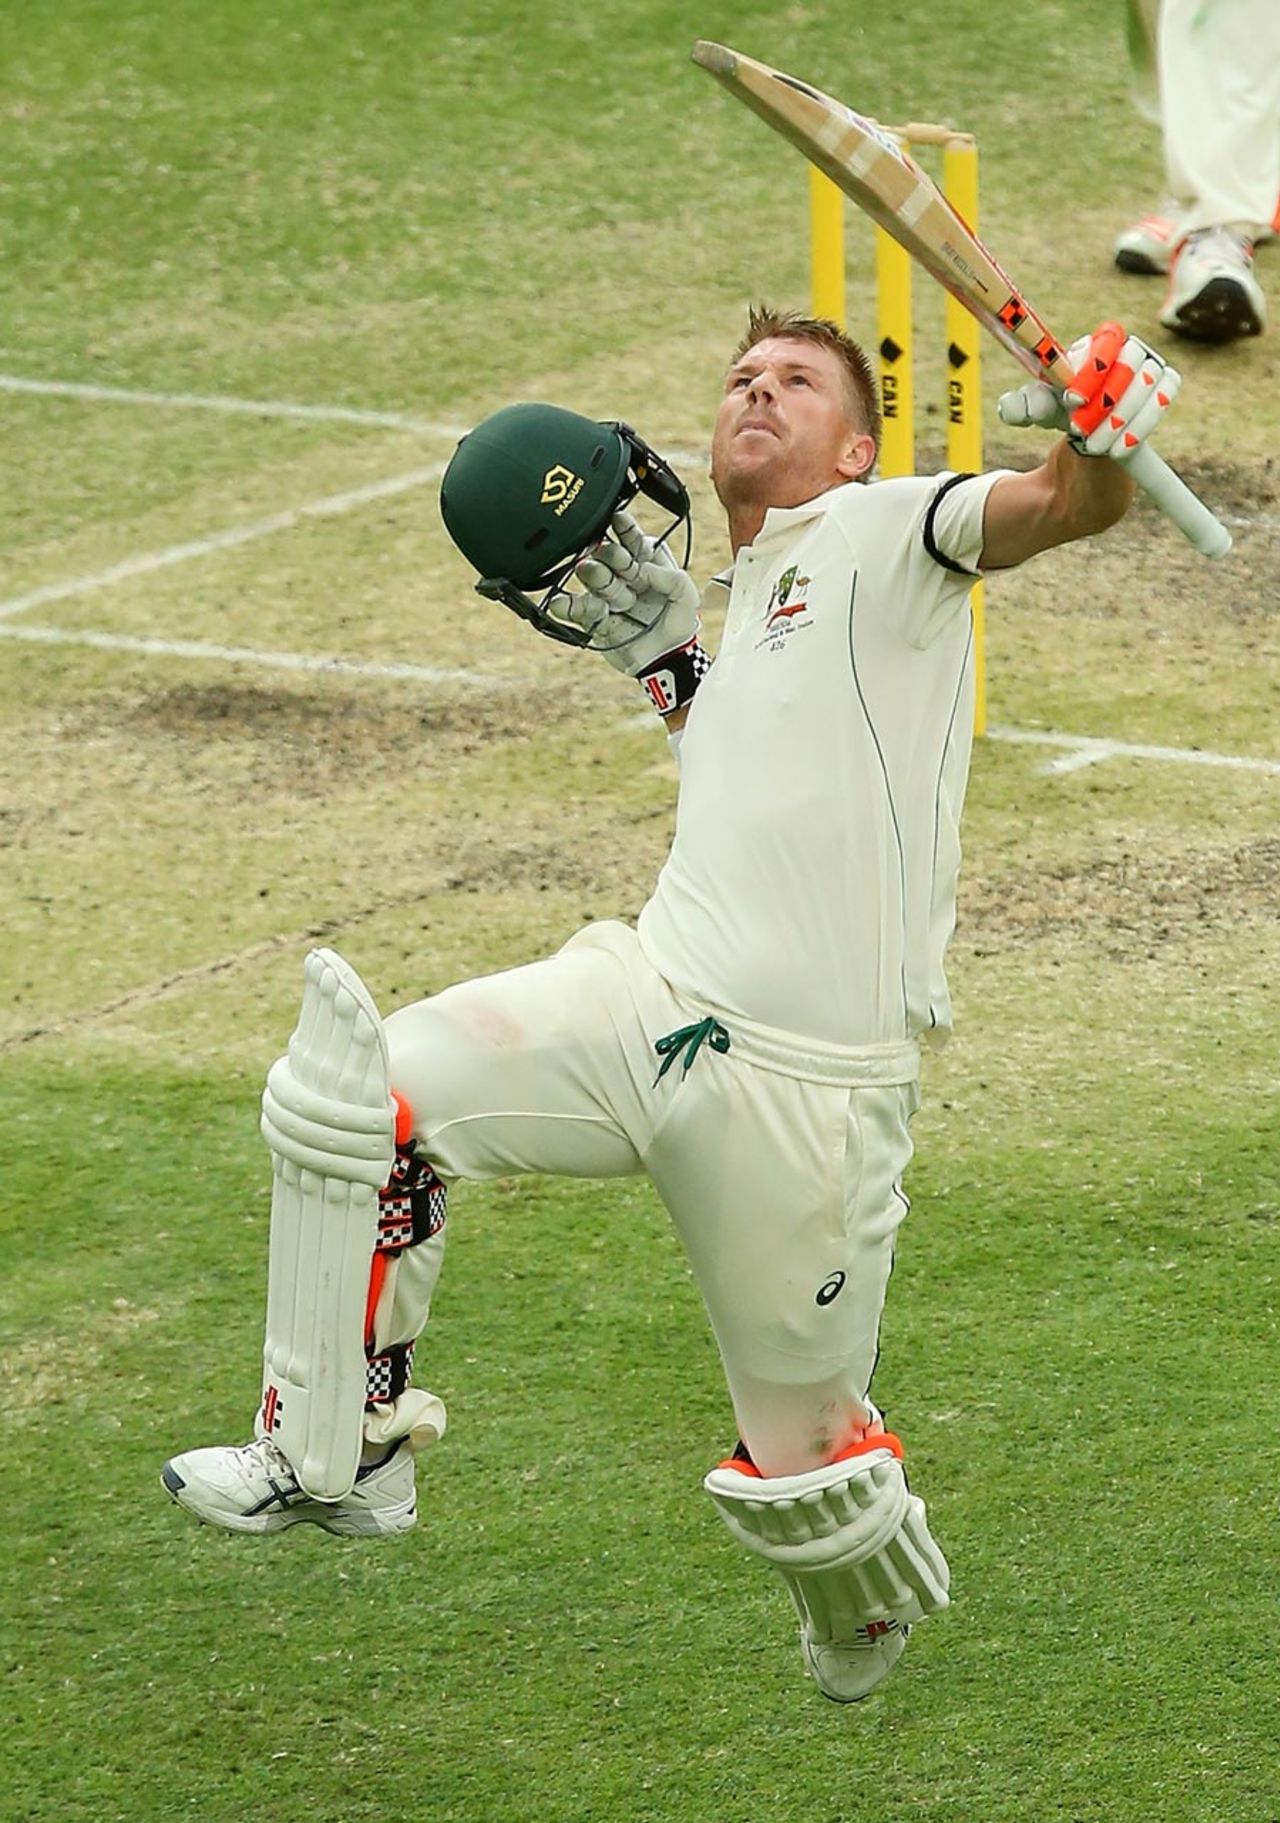 The trademark David Warner leap on reaching a century, Australia v New Zealand, 1st Test, Brisbane, 3rd day, November 7, 2015